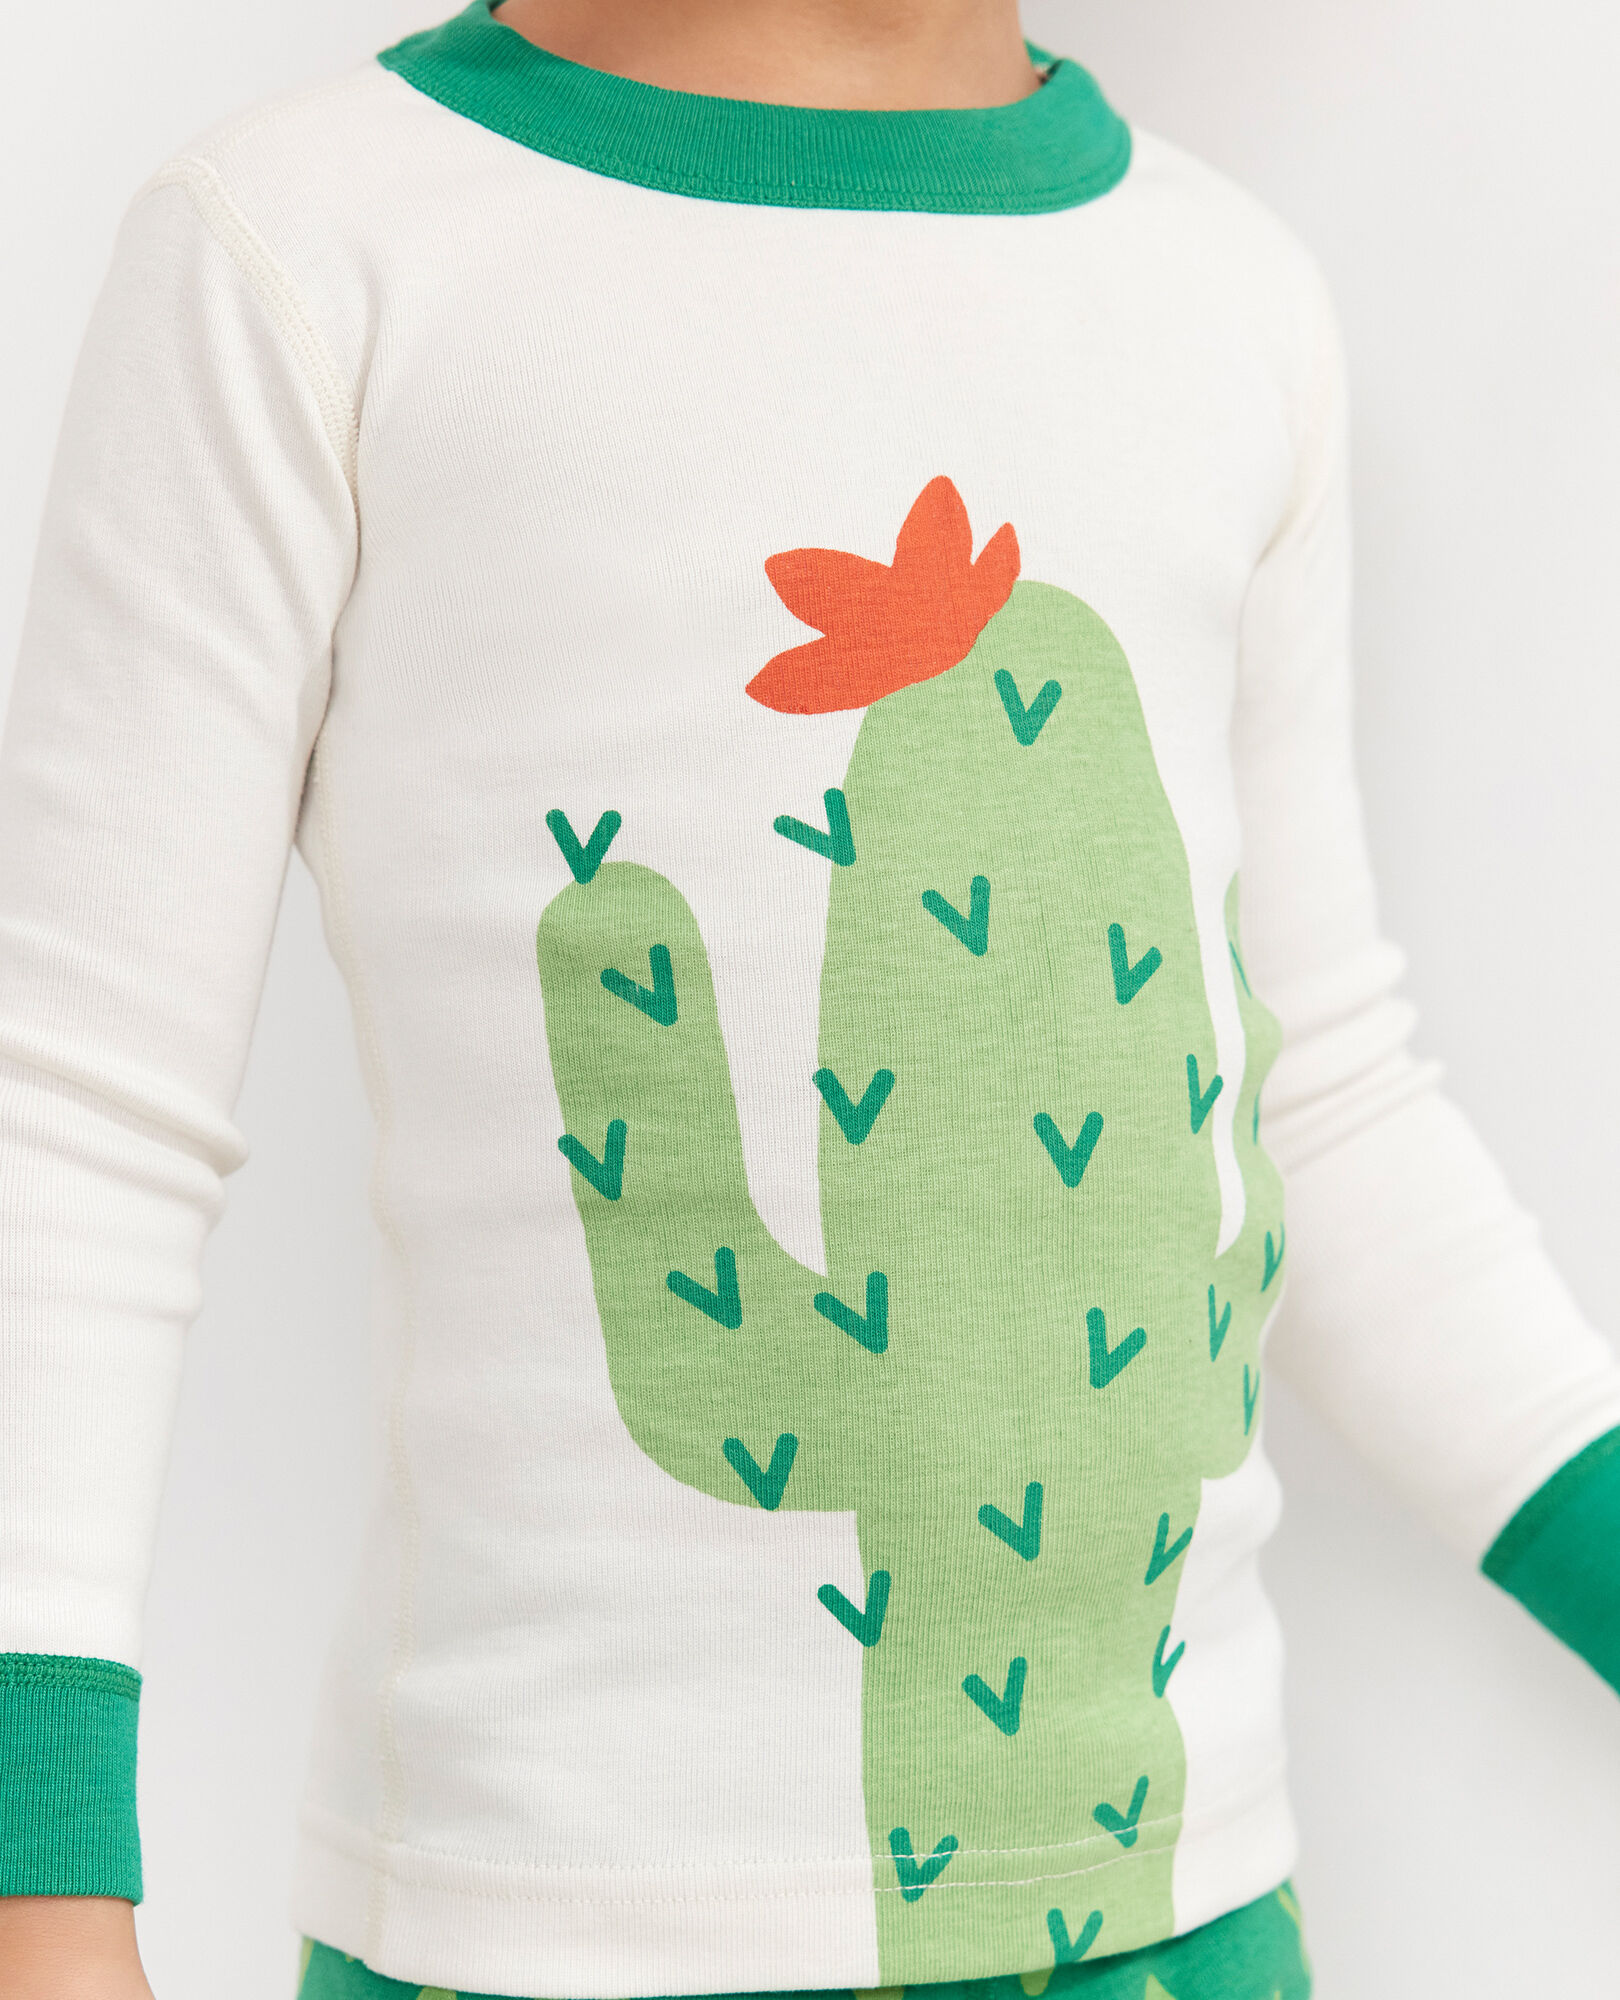 Baby Long-Sleeved Shirt+Pant Set Cactus Printed Pajamas Cotton O-neck Cute Suit 90